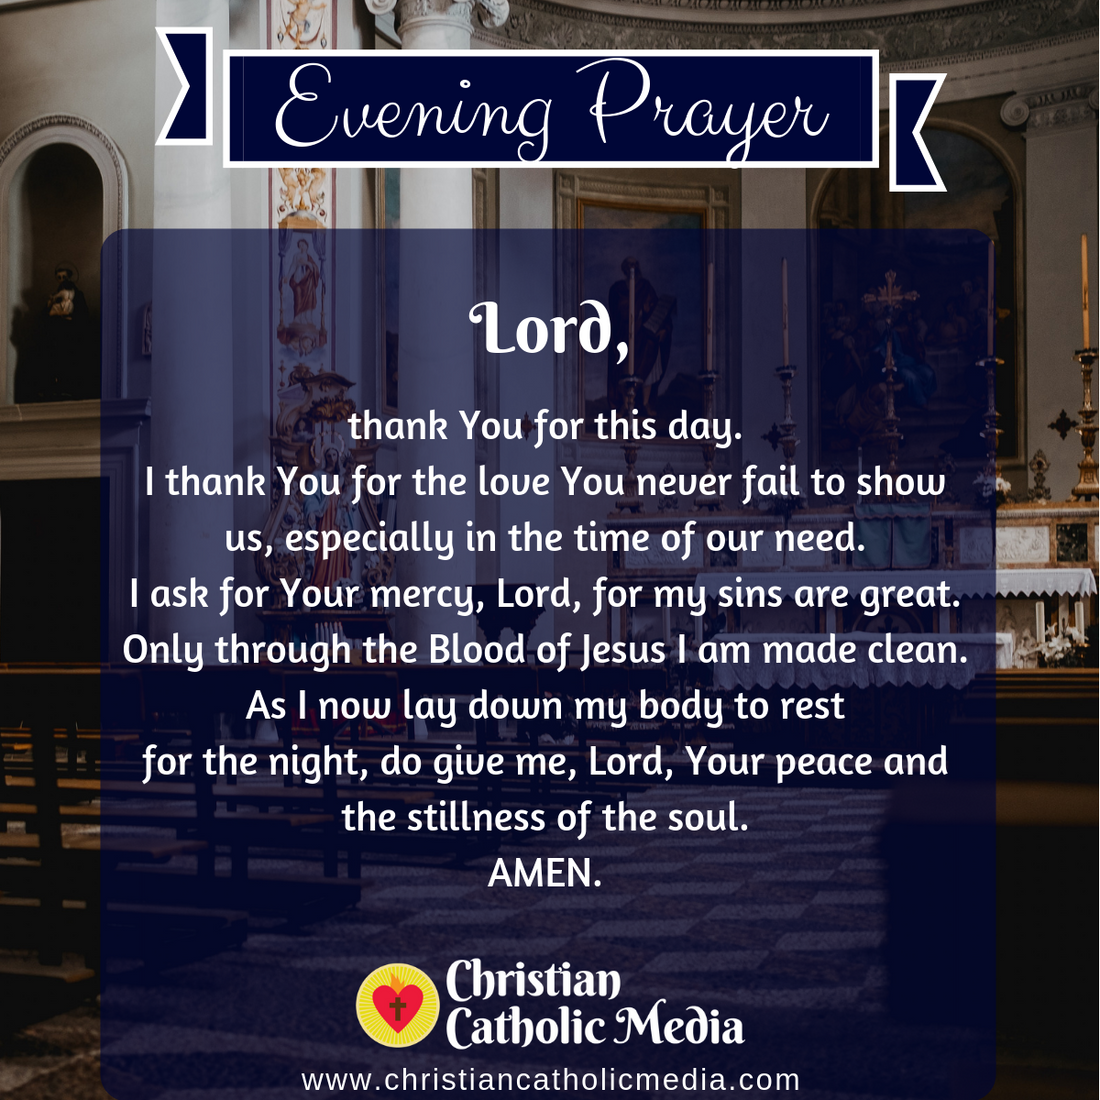 Evening Prayer Catholic Wednesday March 30, 2022